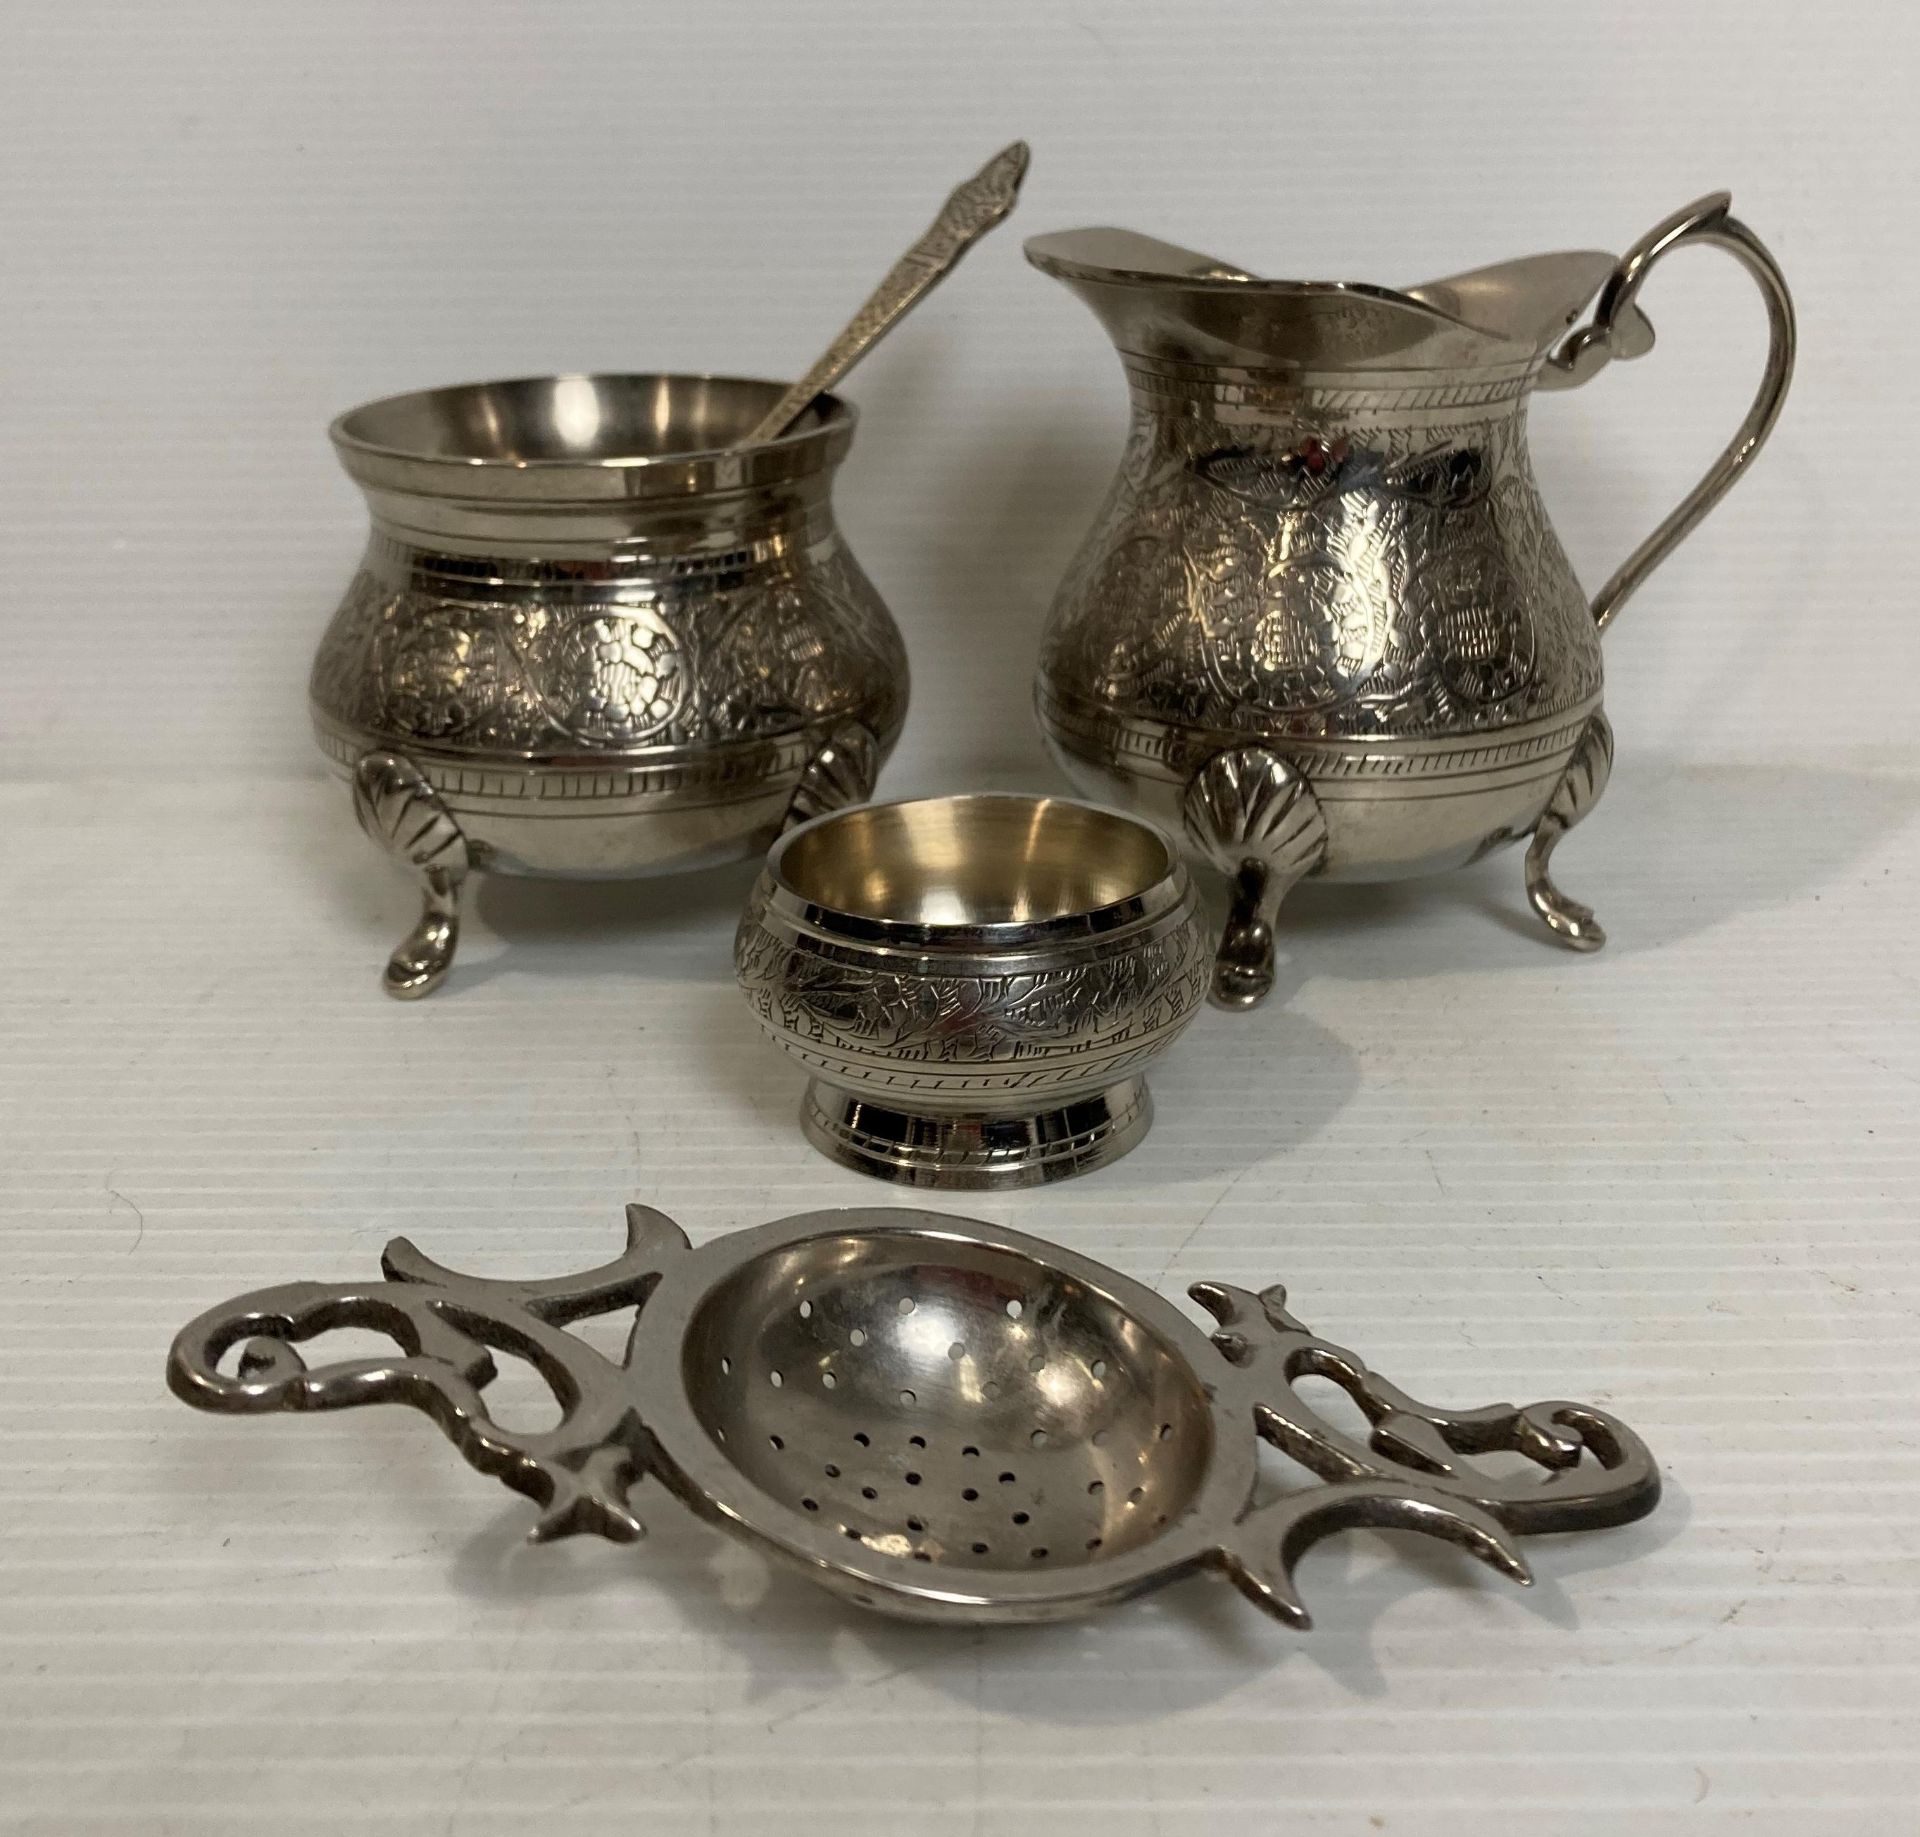 A six-piece Indian plated tea-service including tea pot, milk jug, sugar bowl, tray, - Image 3 of 4